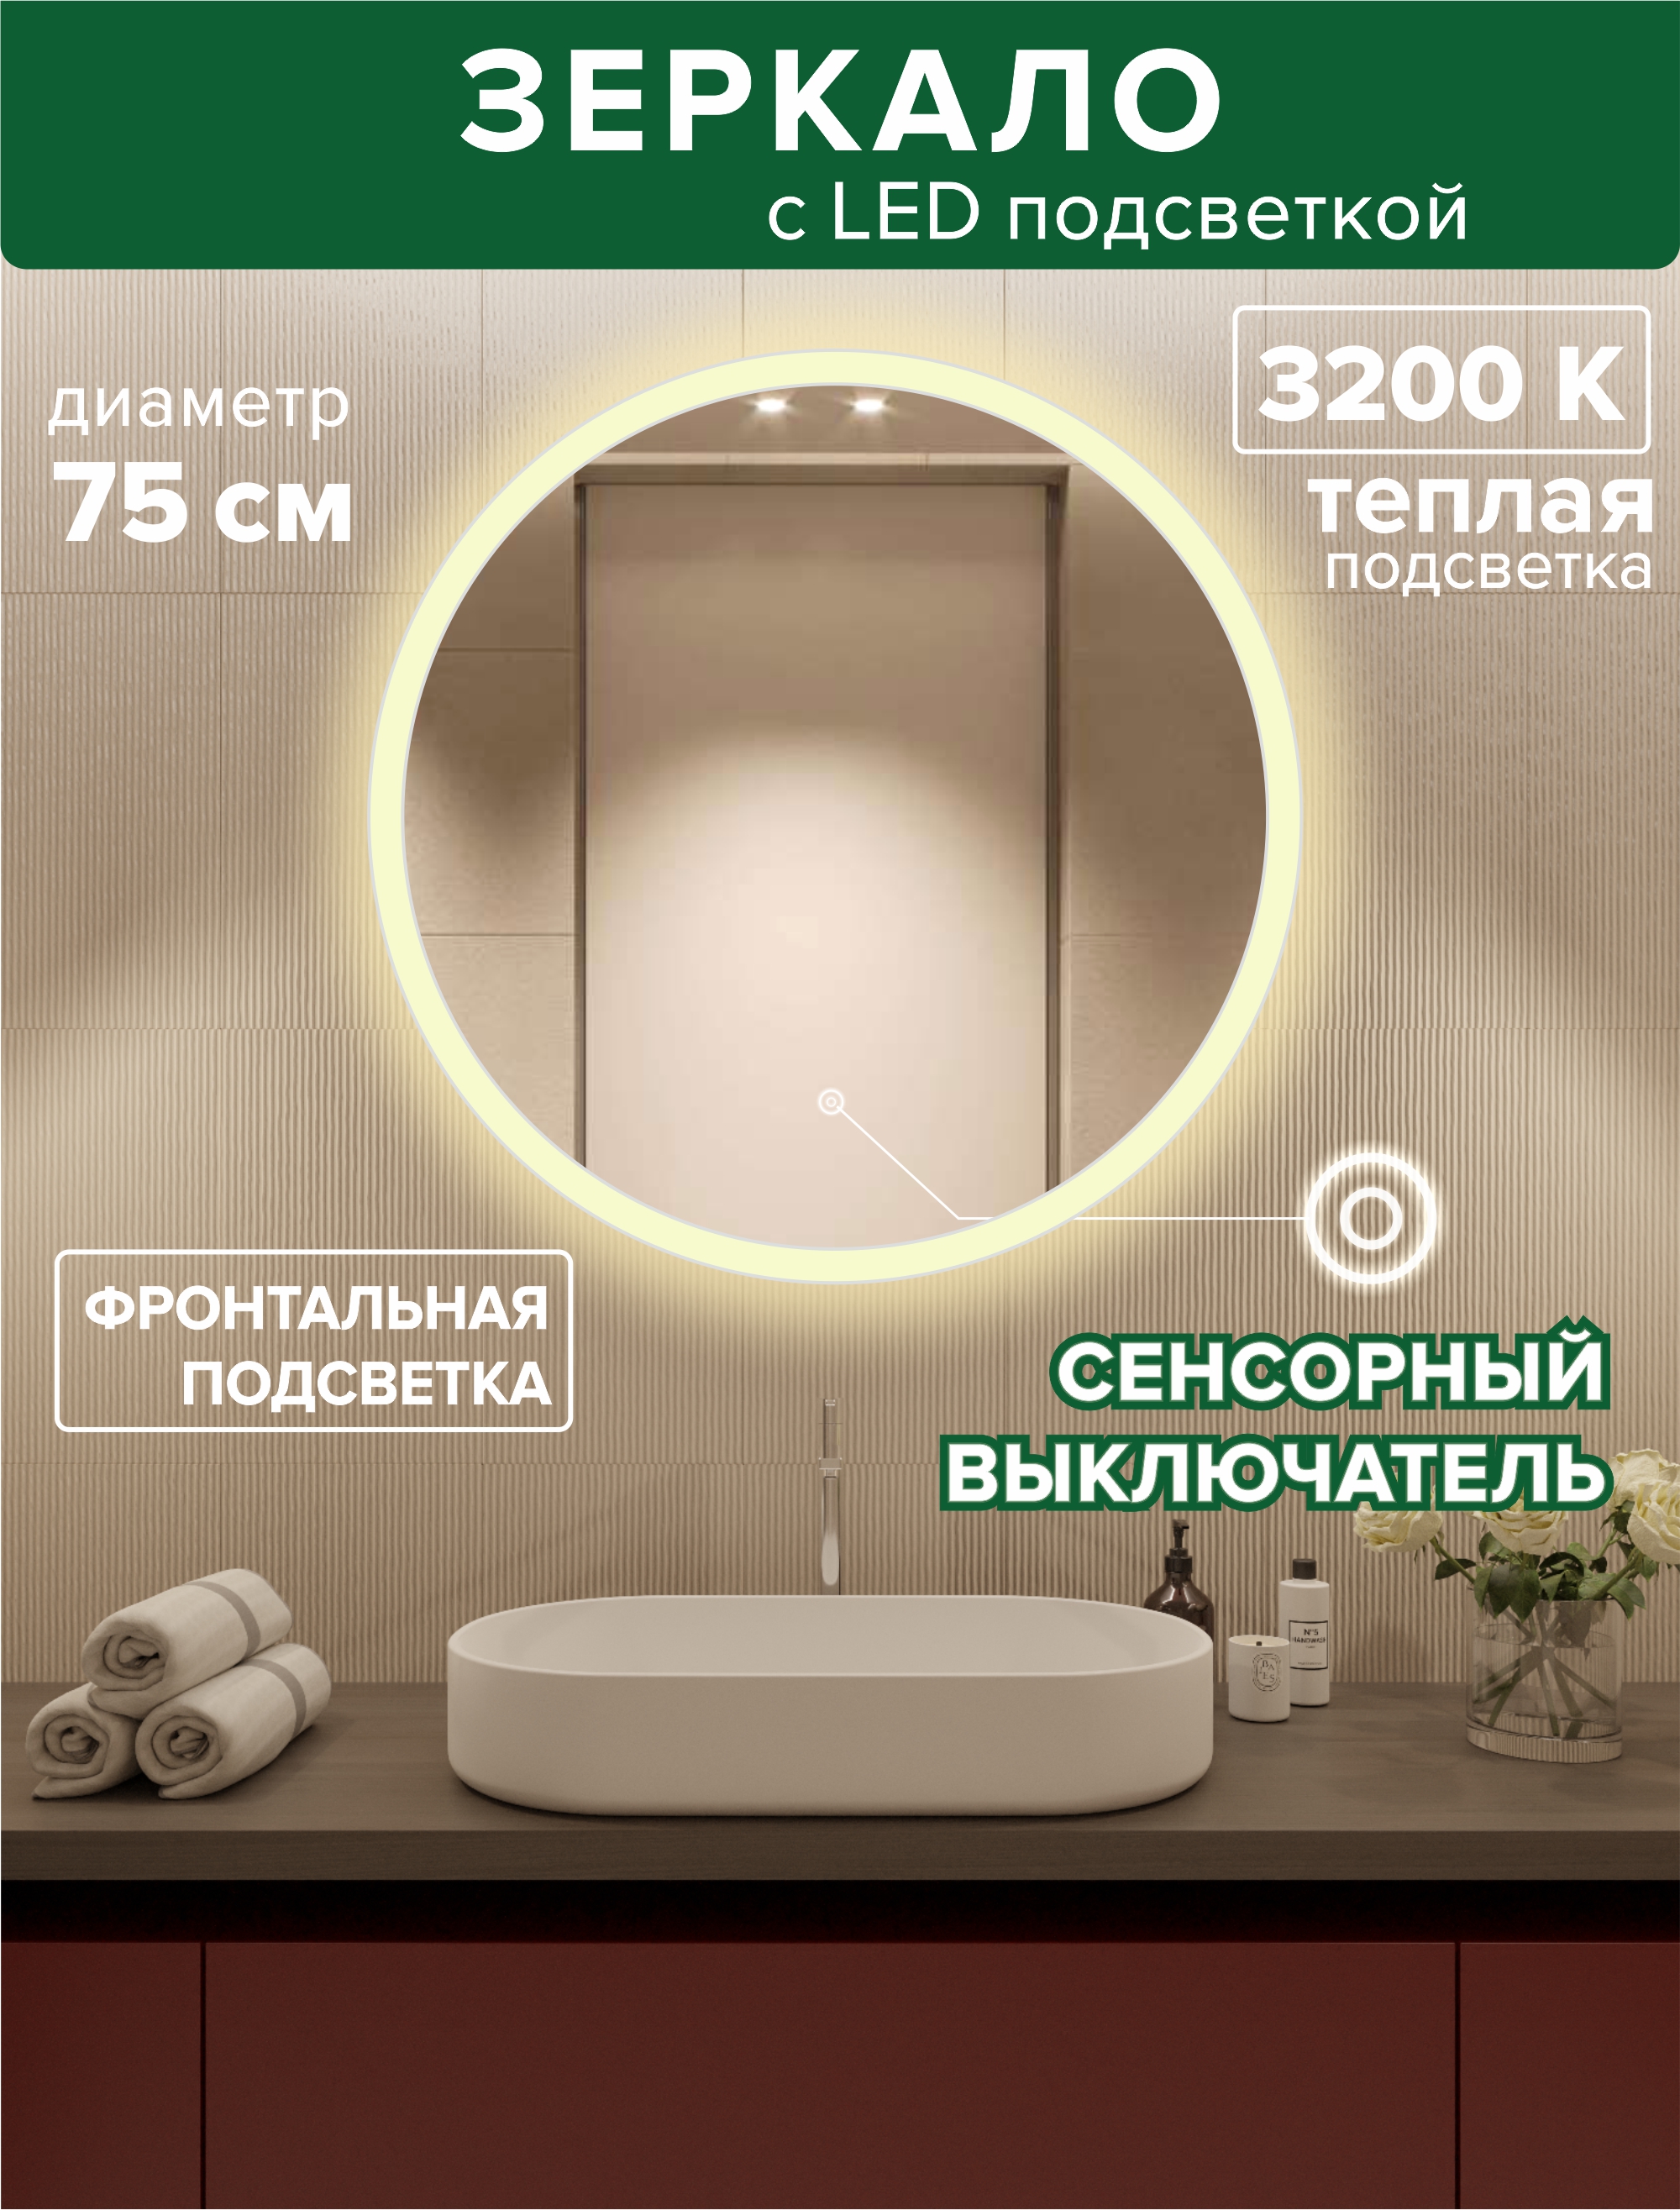 Зеркало для ванной Alfa Mirrors фронтальная теплая подсветка 3200К, круглое 75см,MSvet-75t led pls 200 20m 240v ww bl f w o белая теплая пров белый теплый flash без силового шнура